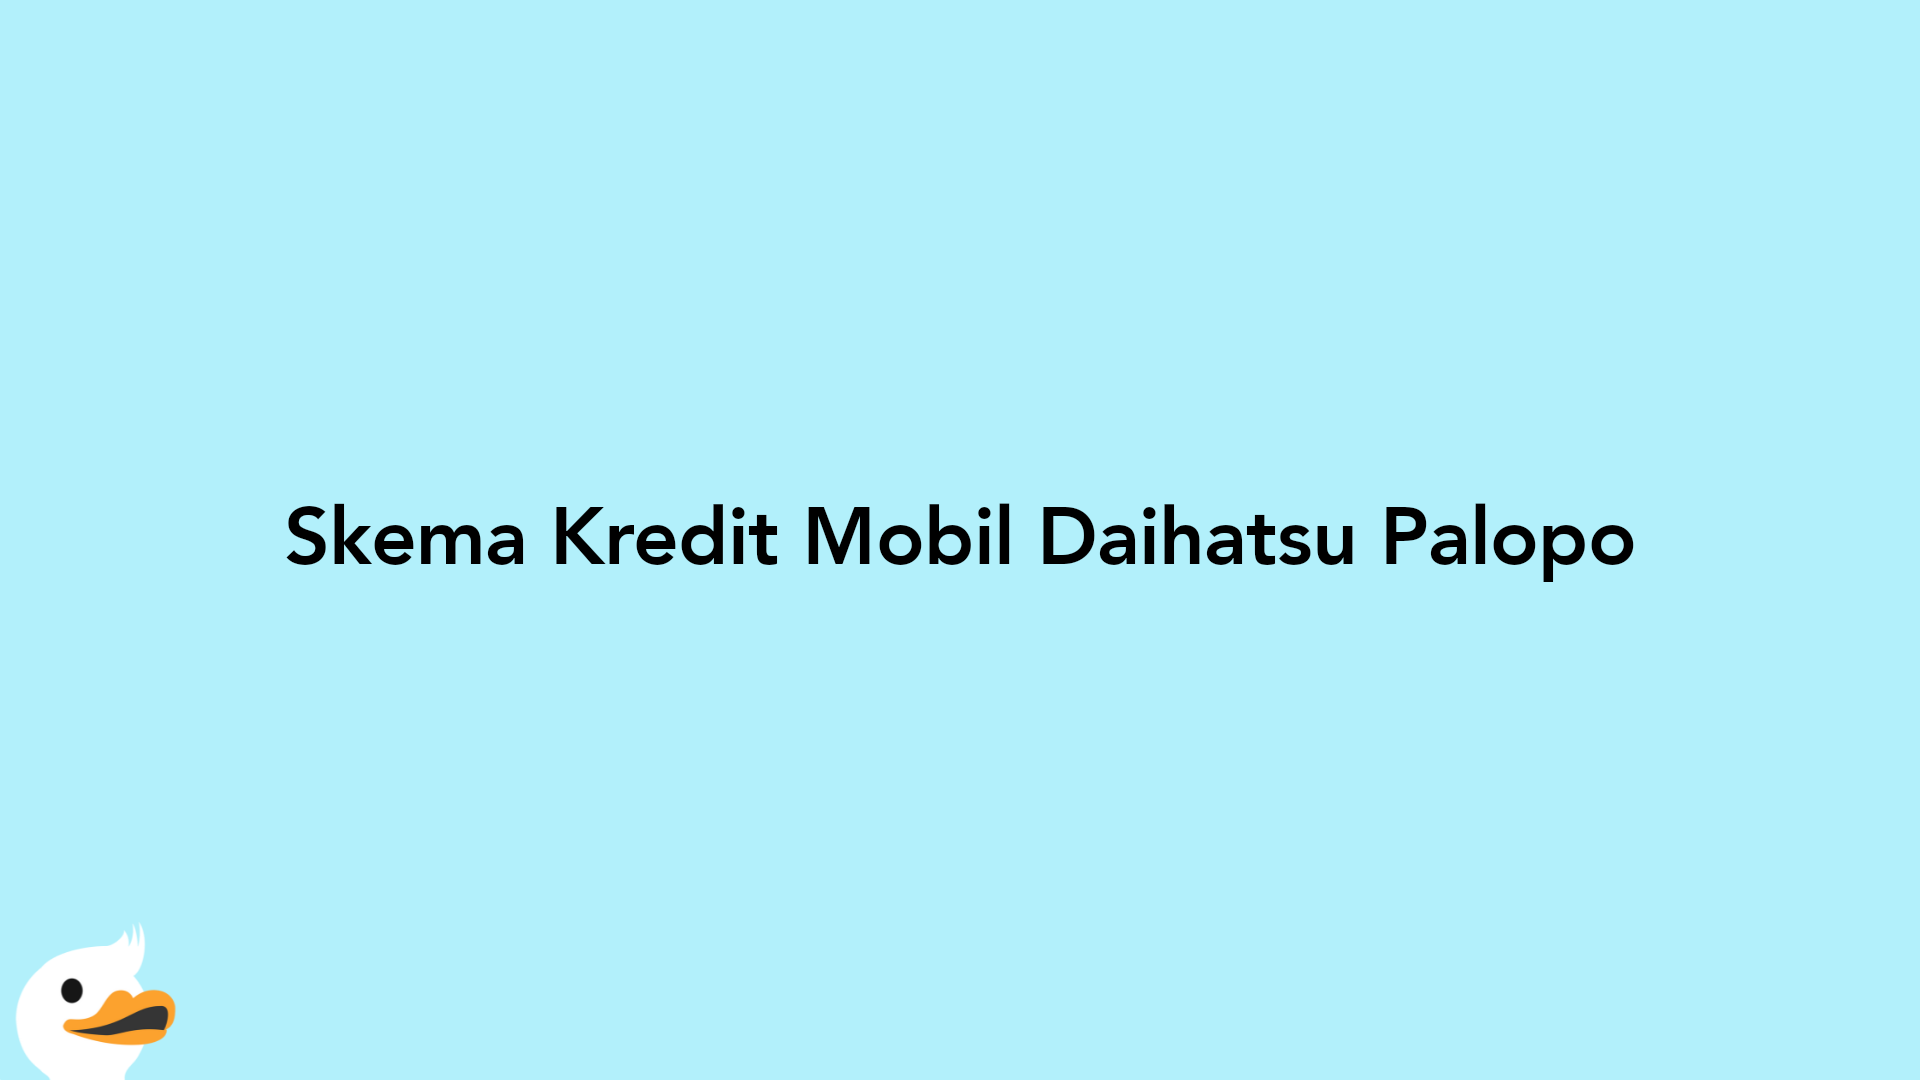 Skema Kredit Mobil Daihatsu Palopo